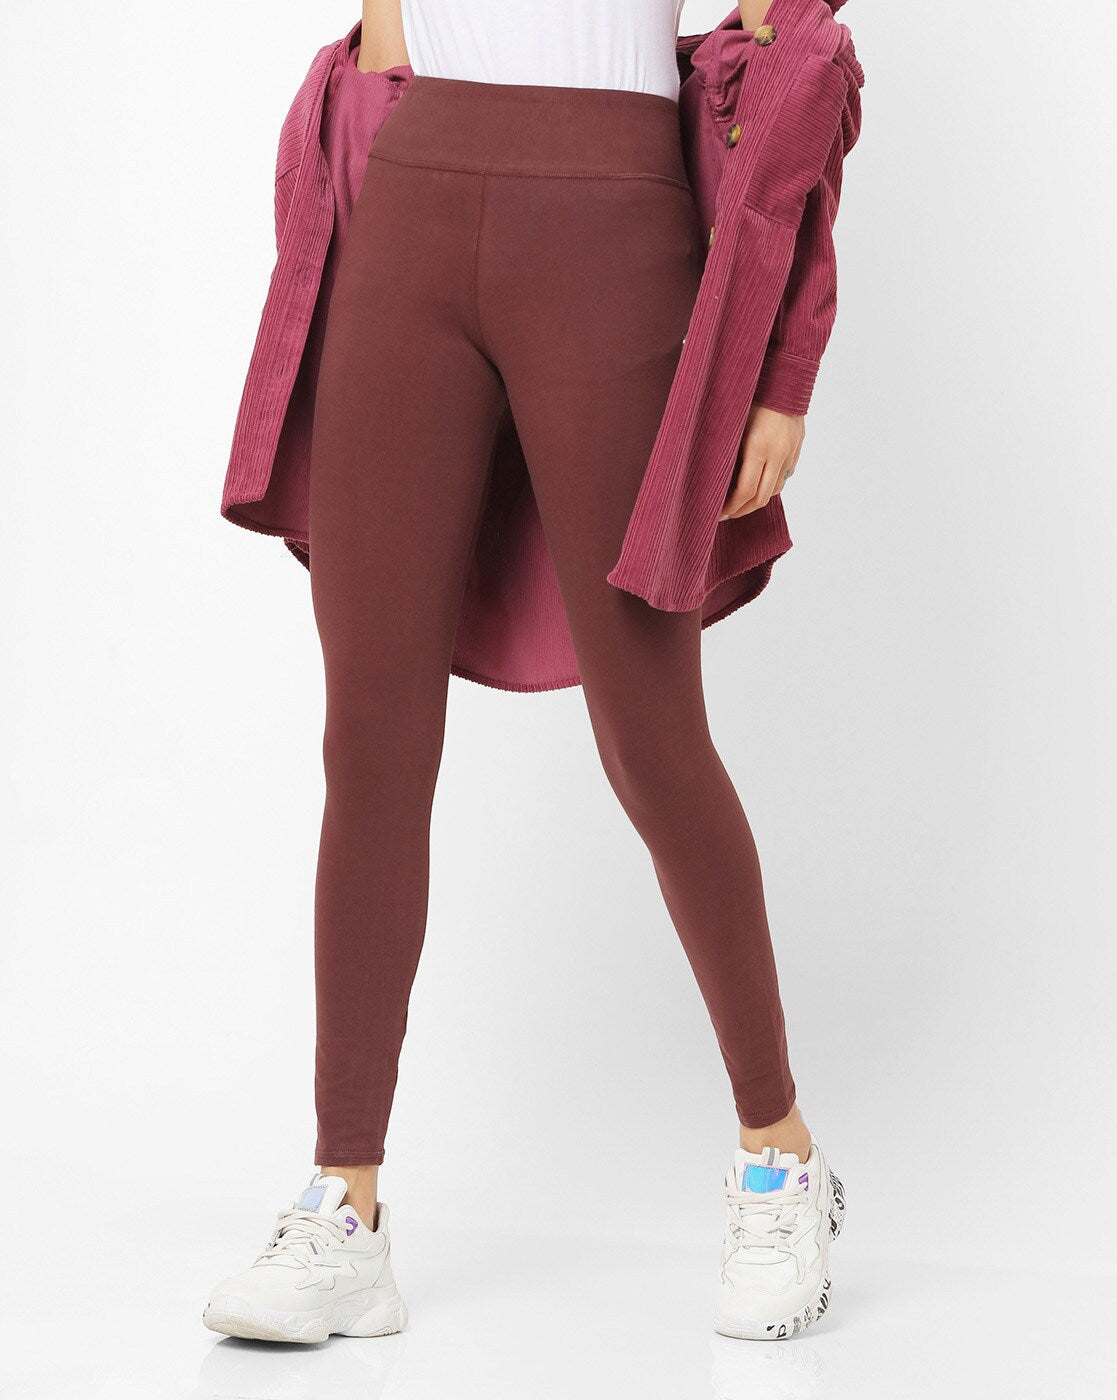 Lululemon maroon align leggings, 28” size 2, $46